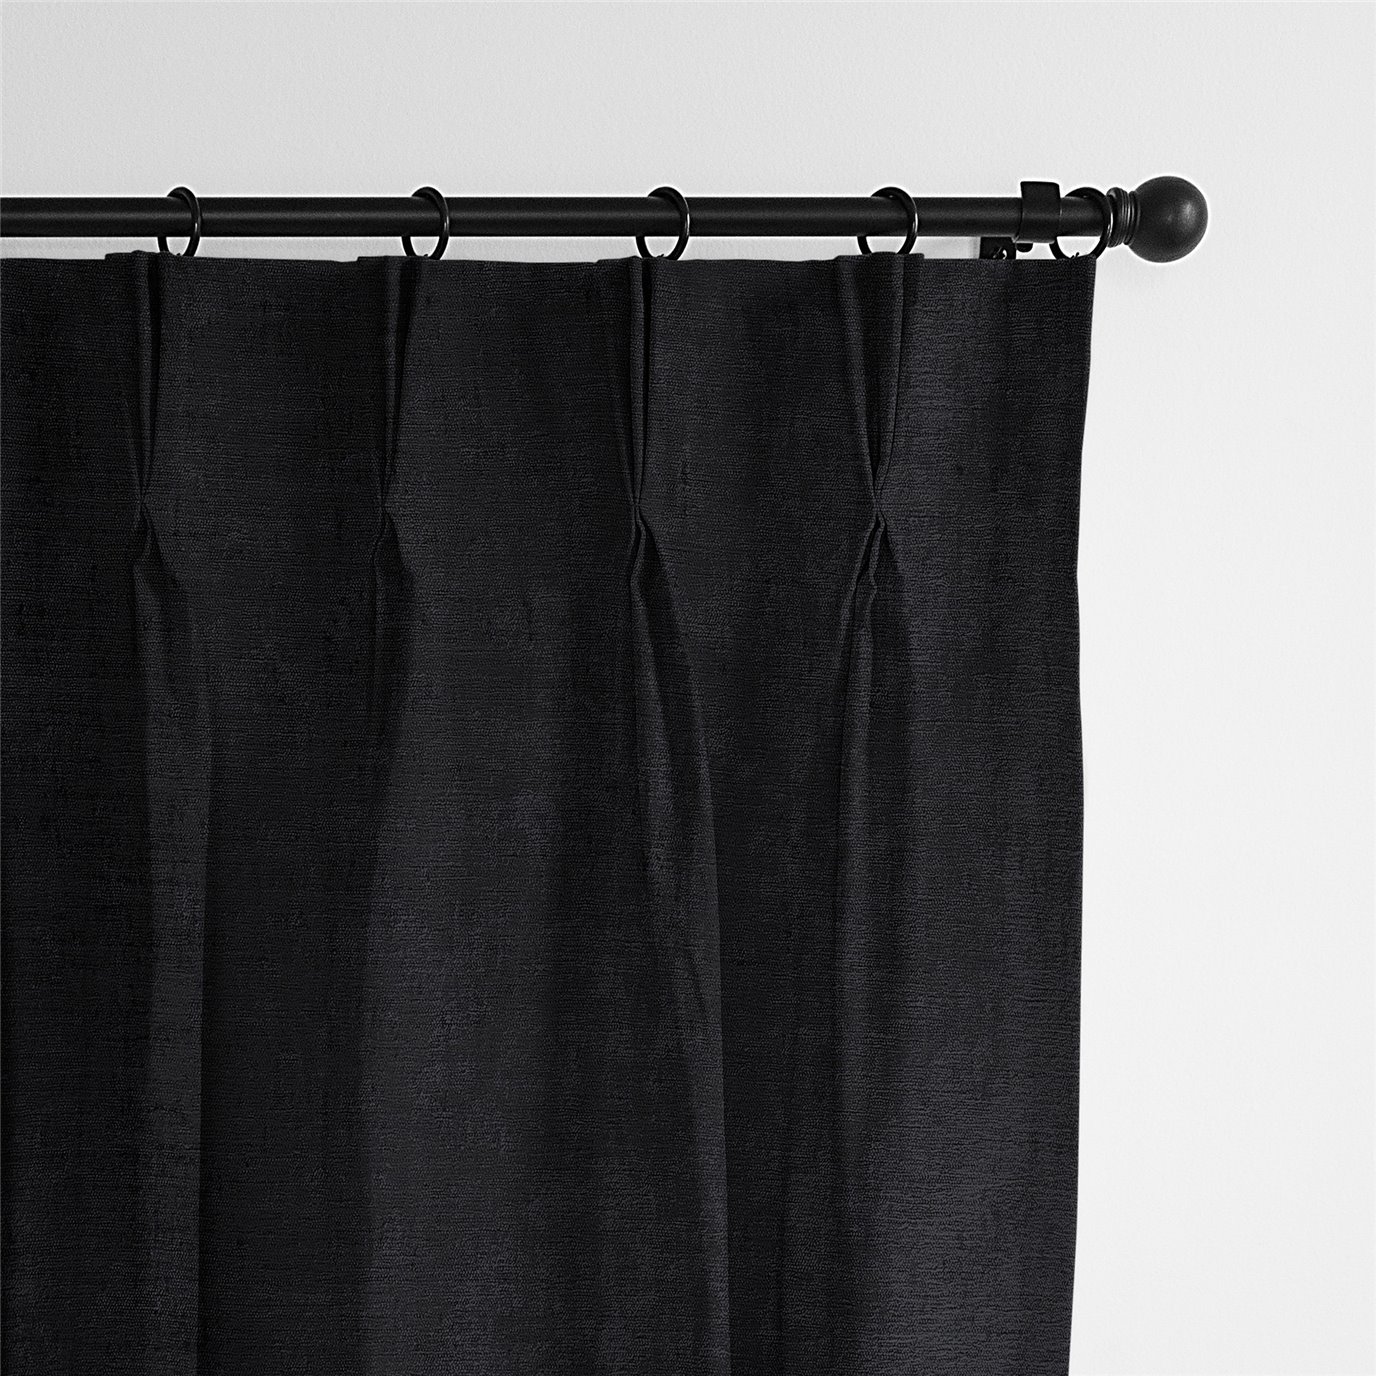 Juno Velvet Black Pinch Pleat Drapery Panel - Pair - Size 20"x144"